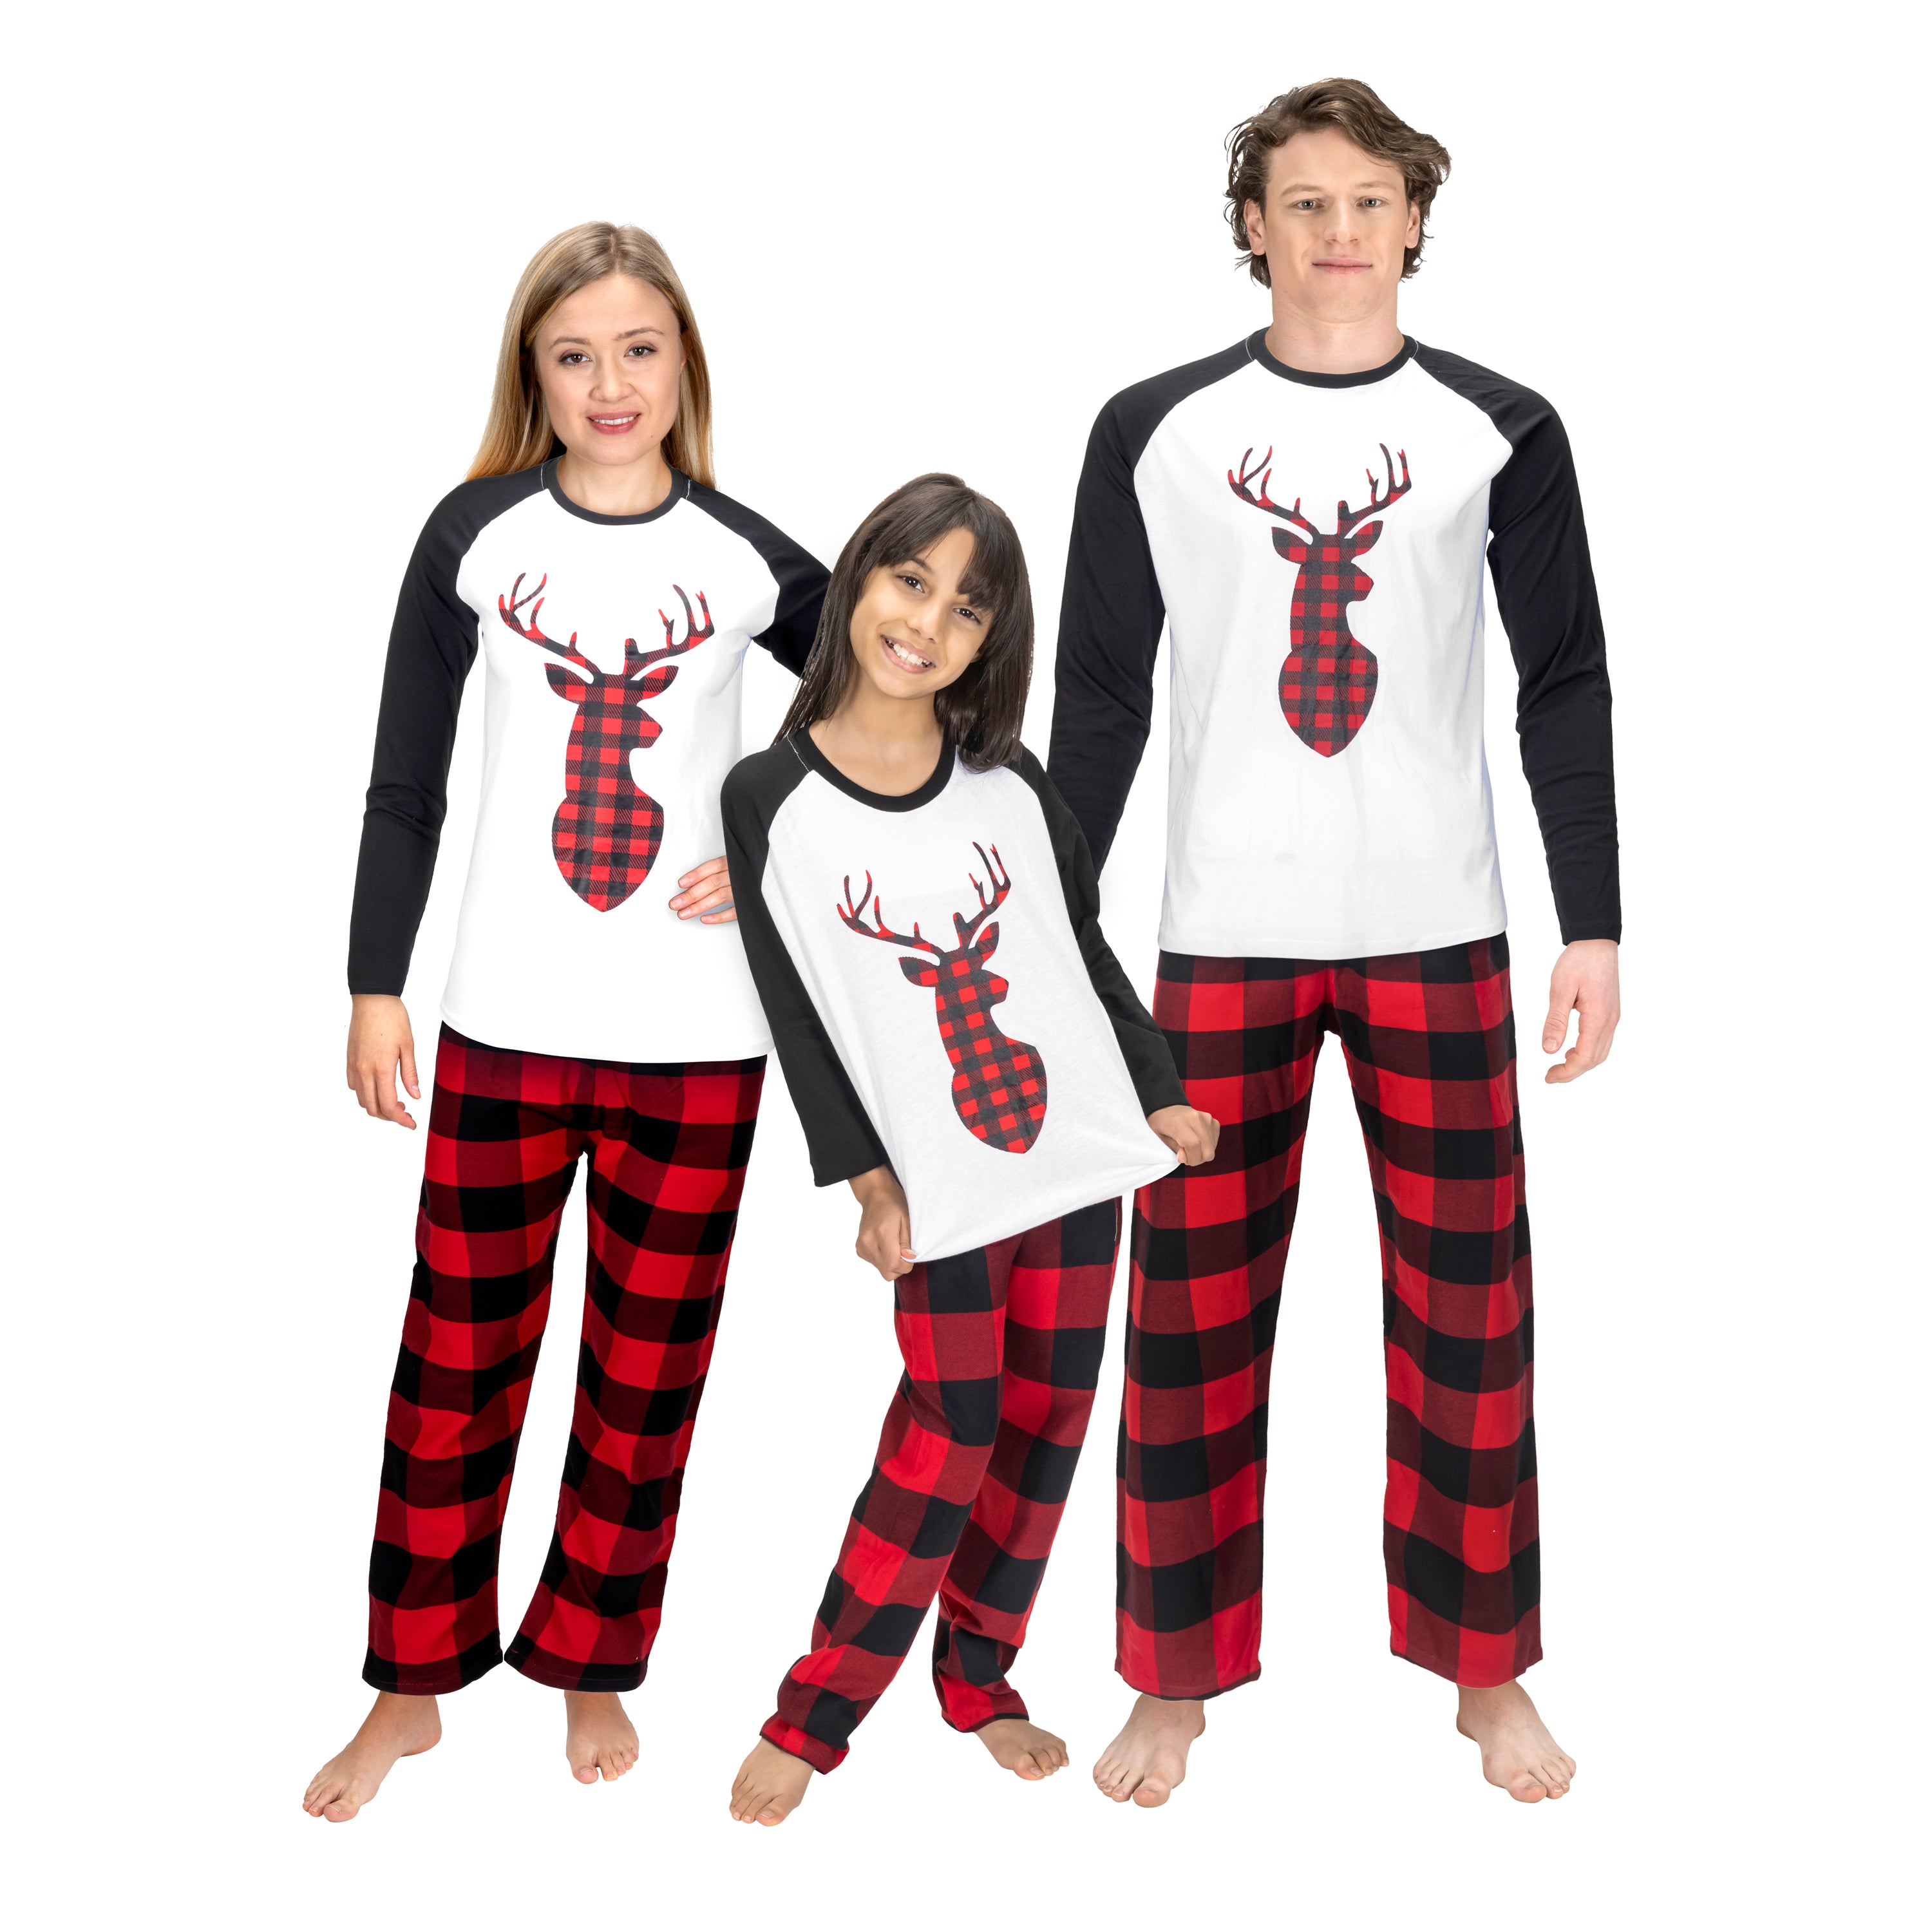  QUNISY Family Pajamas Christmas Matching Sets Xmas